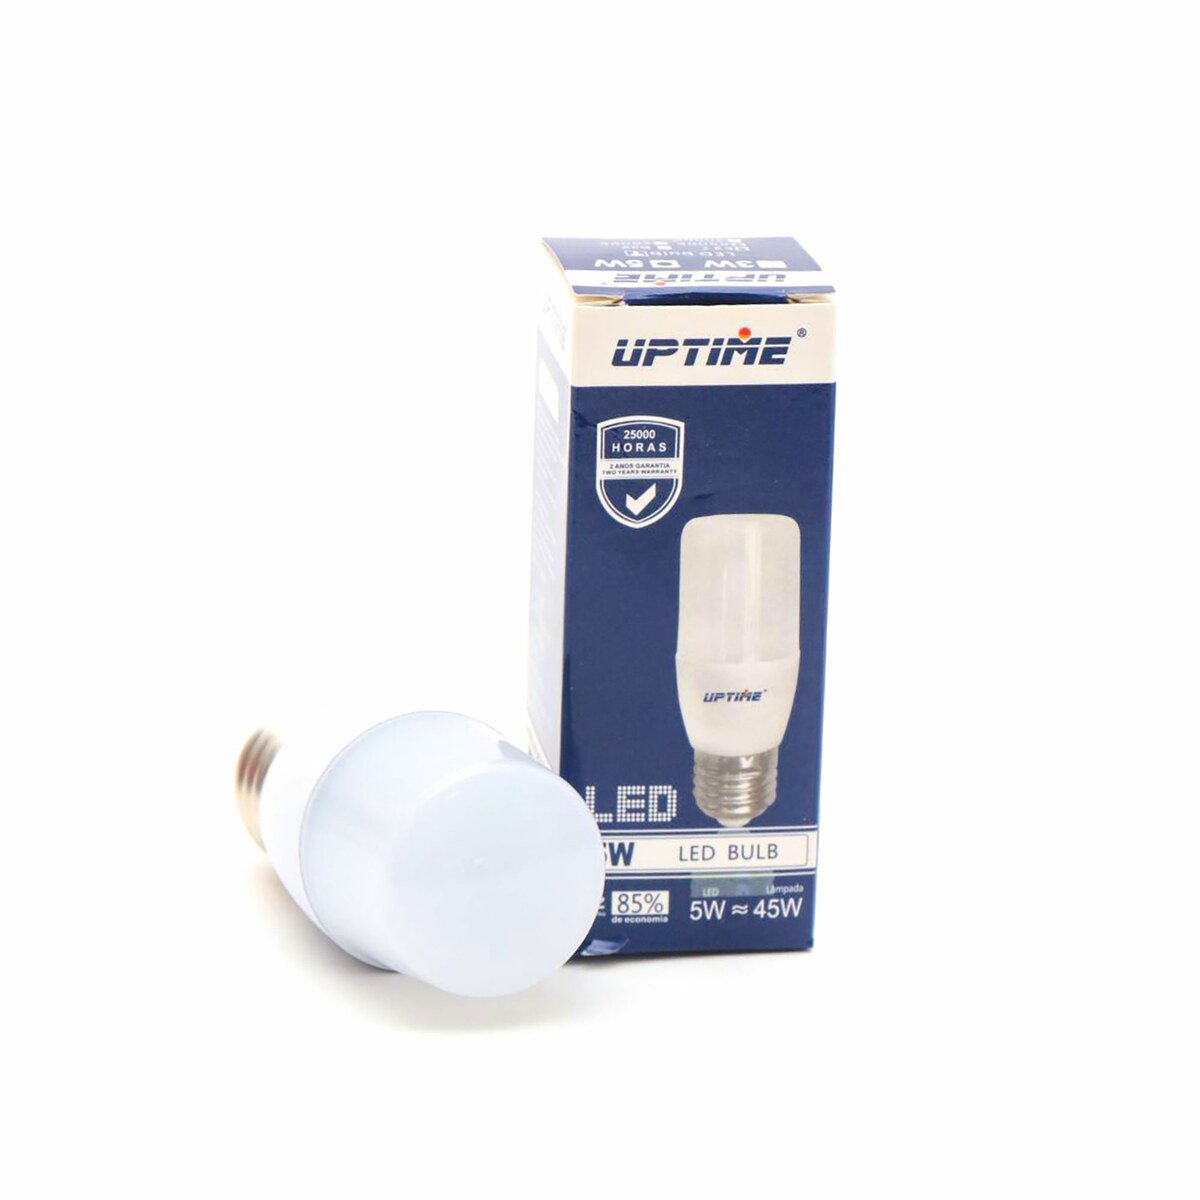 Uptime LED Bulb 5W E27 WW TX2053 Warm White